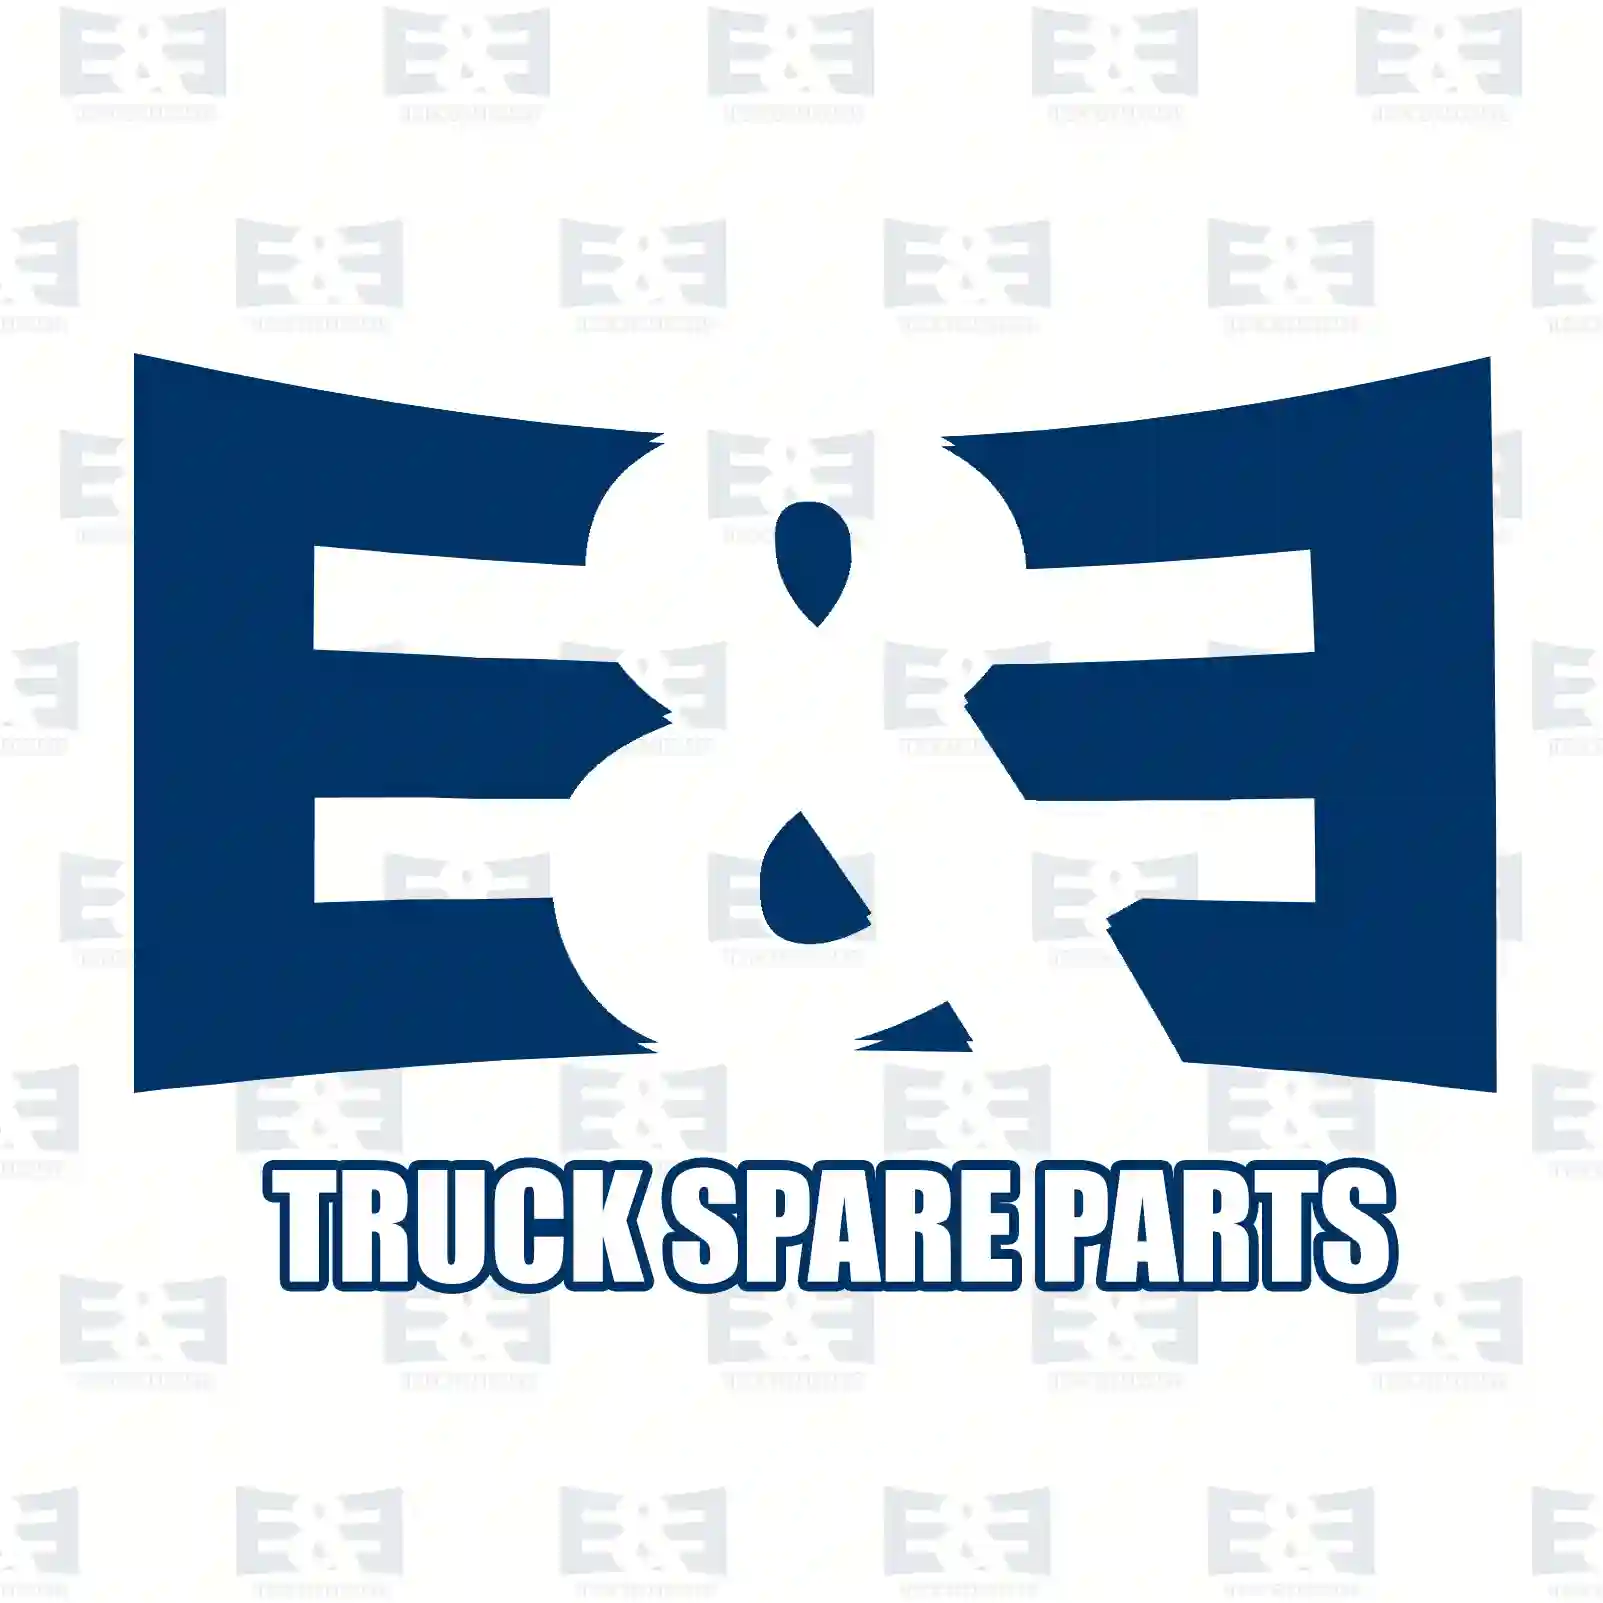 Drum brake lining kit, axle kit, 2E2293008, 5001860032, 5000288508, 5000811113, 5000811574, 5000820063, 5000821817, 5000822063, 5001019221, 5001855106, 5001860032 ||  2E2293008 E&E Truck Spare Parts | Truck Spare Parts, Auotomotive Spare Parts Drum brake lining kit, axle kit, 2E2293008, 5001860032, 5000288508, 5000811113, 5000811574, 5000820063, 5000821817, 5000822063, 5001019221, 5001855106, 5001860032 ||  2E2293008 E&E Truck Spare Parts | Truck Spare Parts, Auotomotive Spare Parts